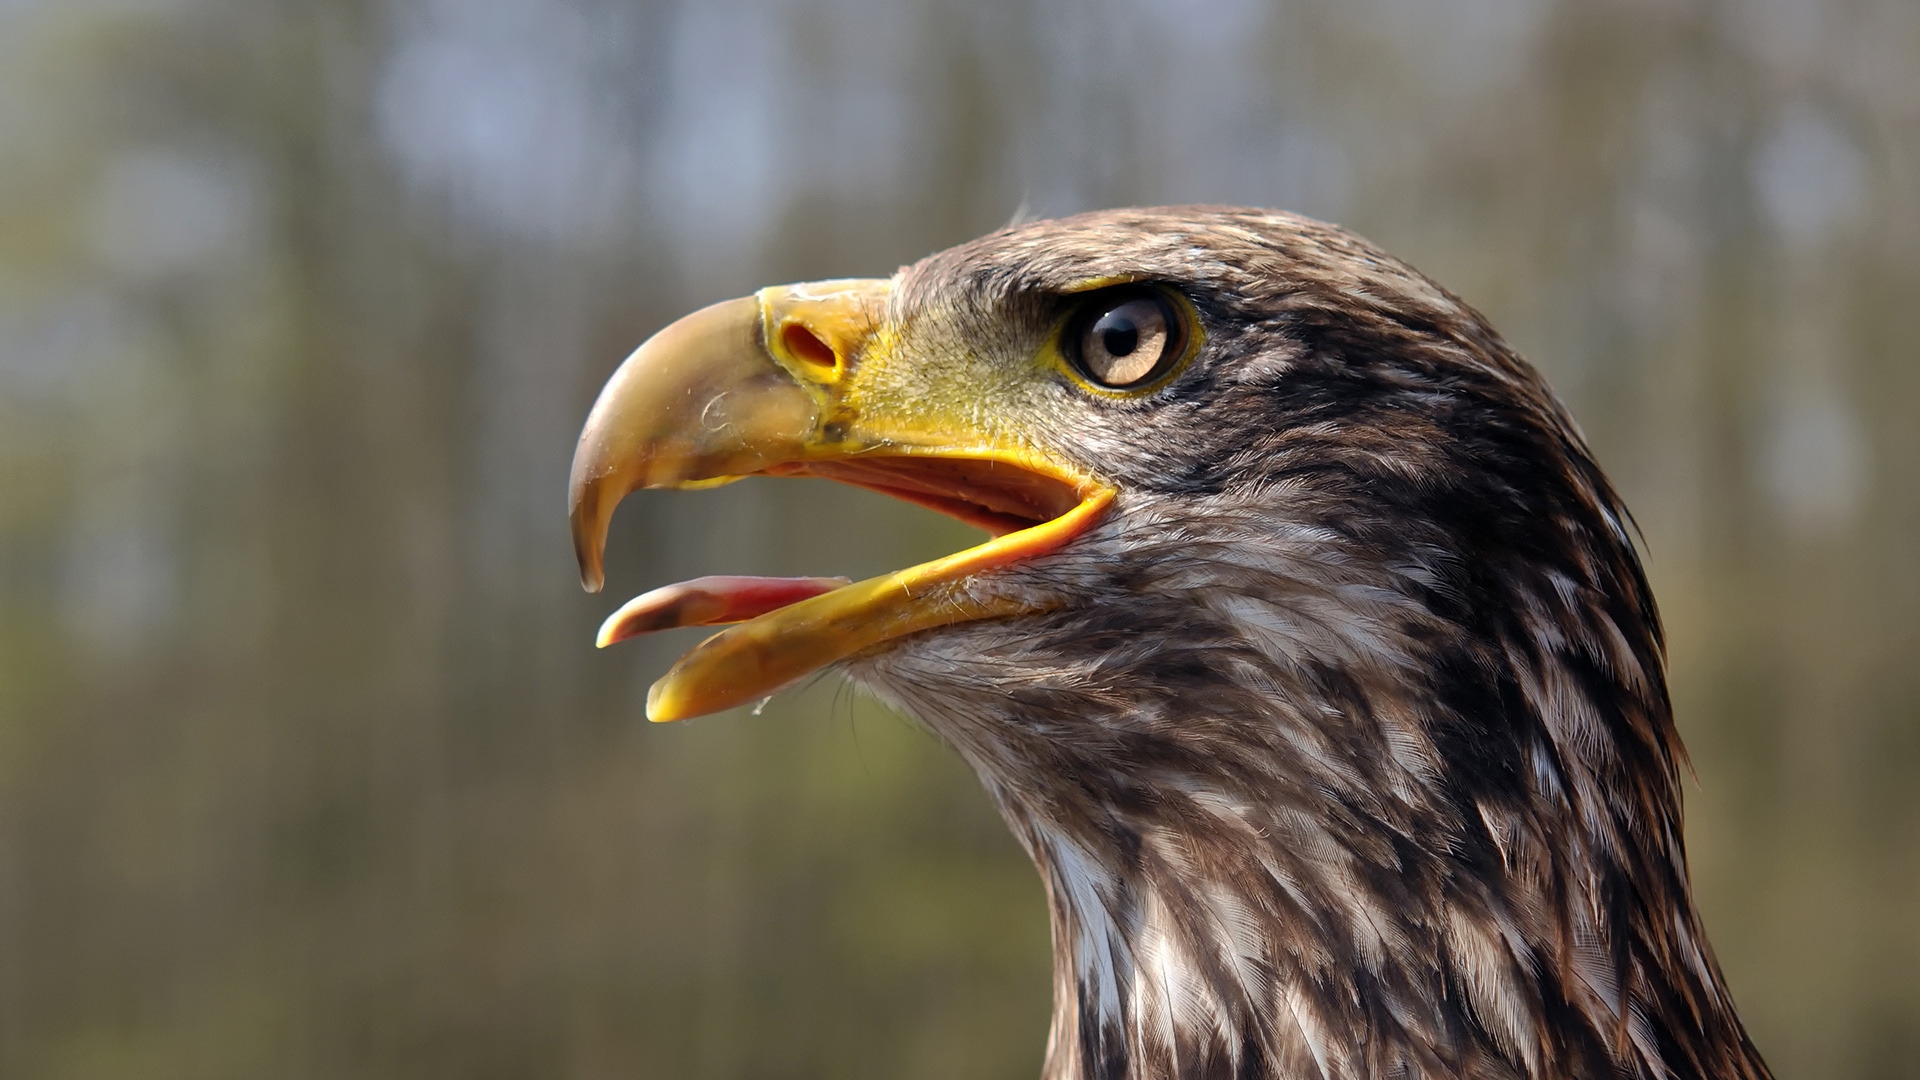 Juvenile Bald Eagle for 1920 x 1080 HDTV 1080p resolution